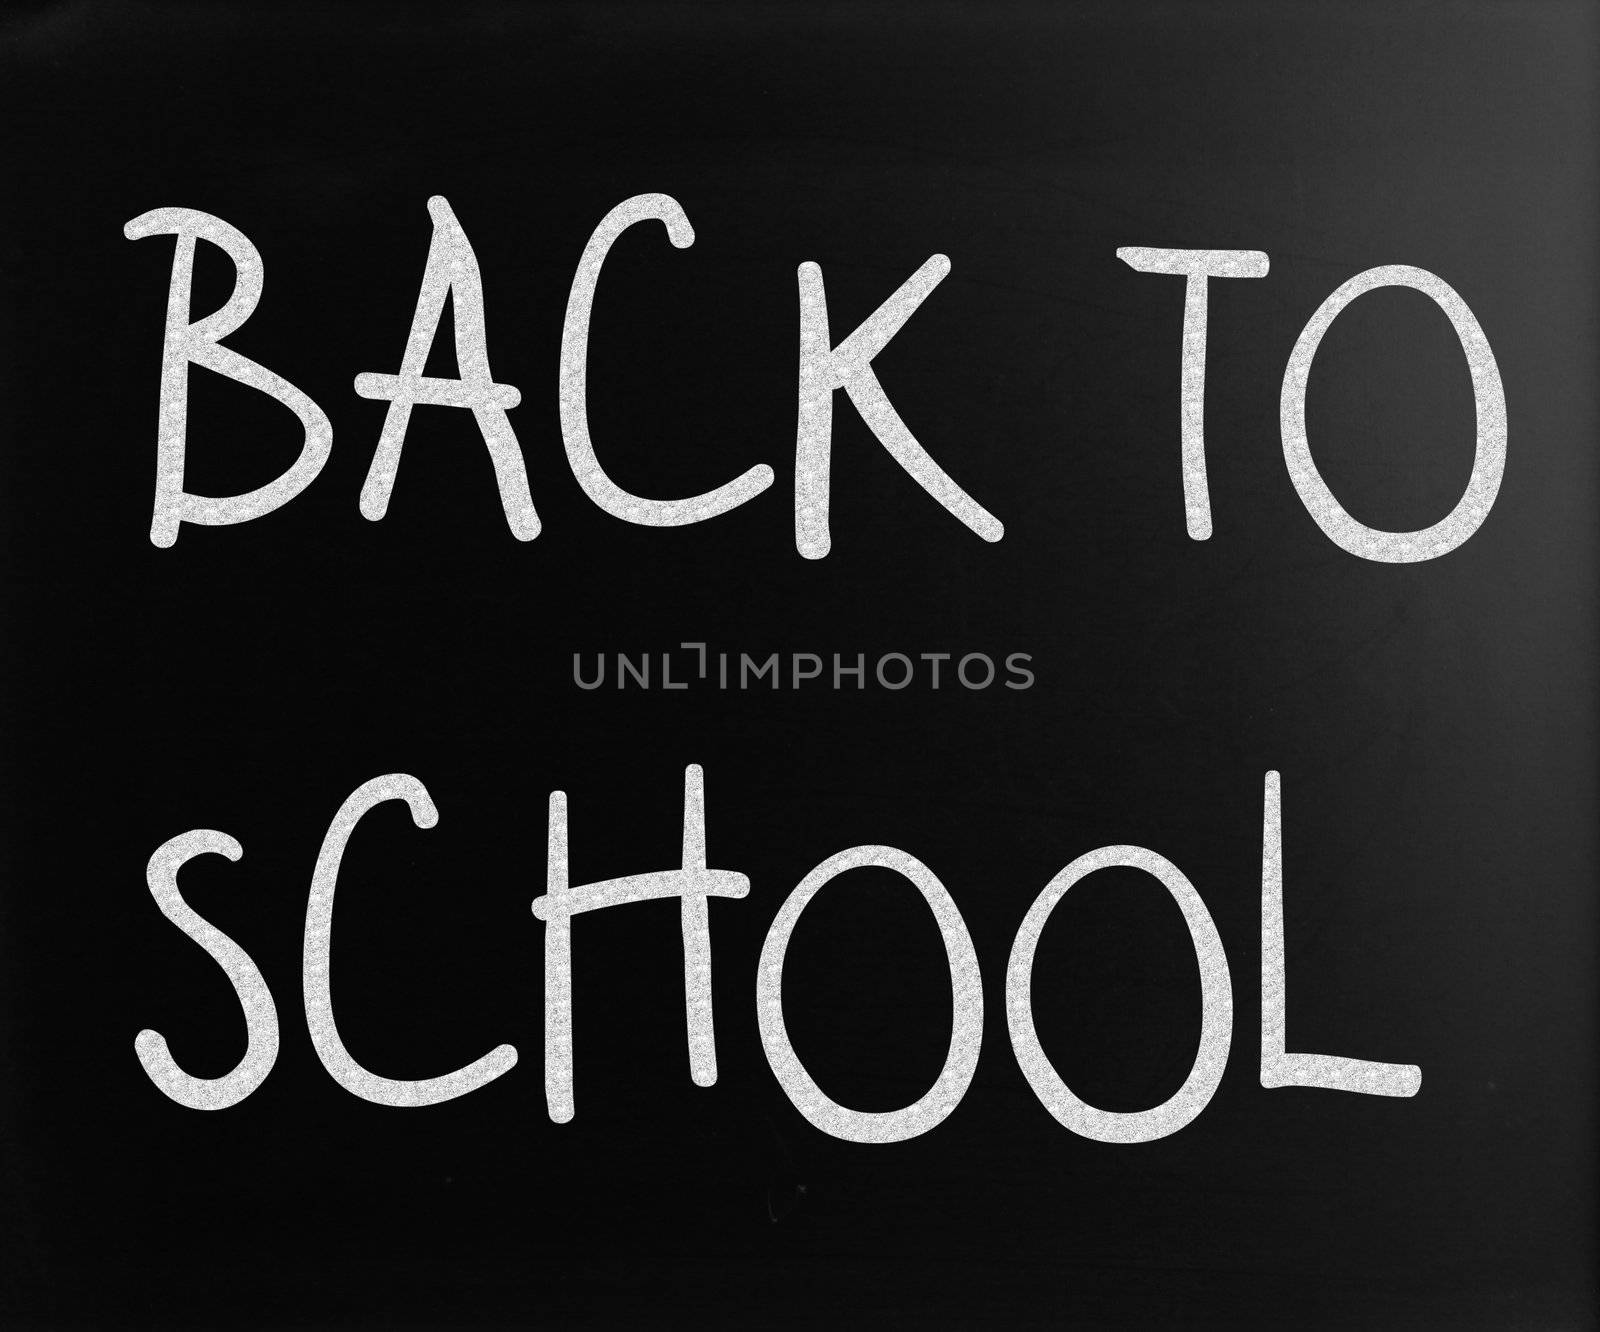 "Back to school" handwritten with white chalk on a blackboard by nenov